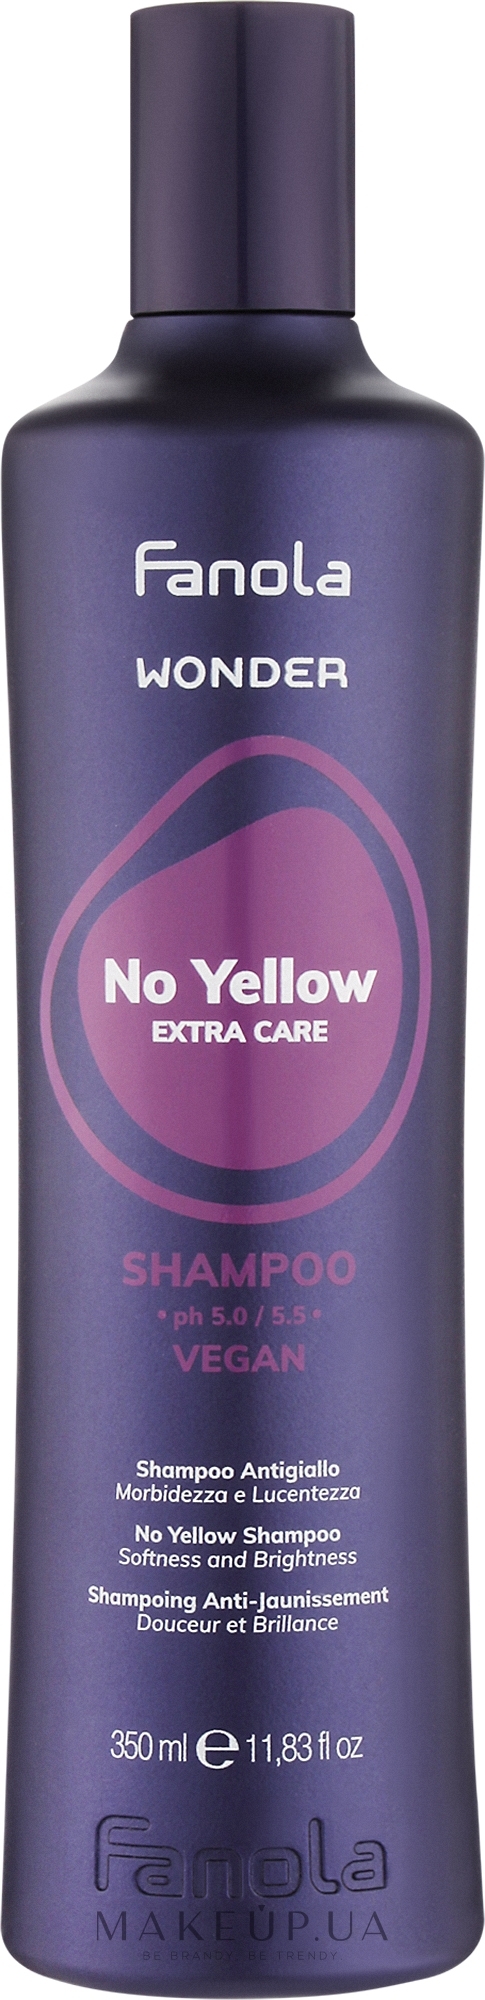 Шампунь антижелтый для волос - Fanola Wonder No Yellow Extra Care Shampoo — фото 350ml